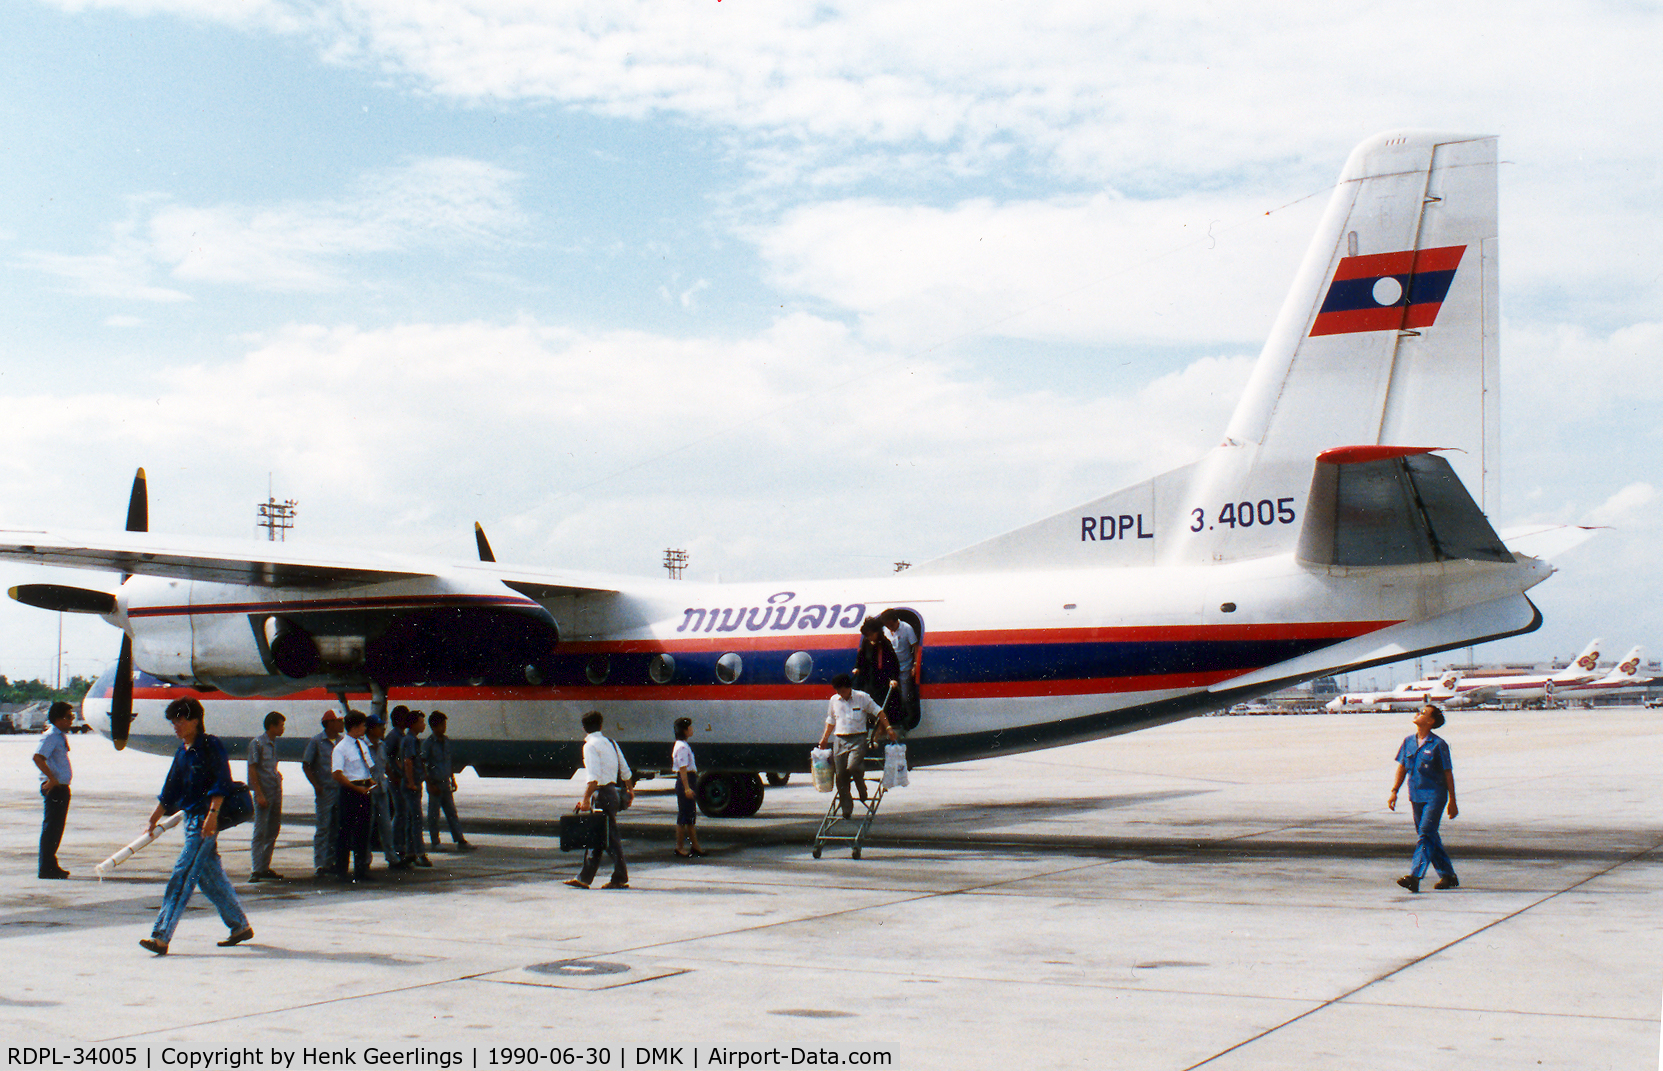 RDPL-34005, 1973 Antonov An-24RV C/N 67310609, Lao Aviation , arvl BKK Don Muang Airport , Jun '90